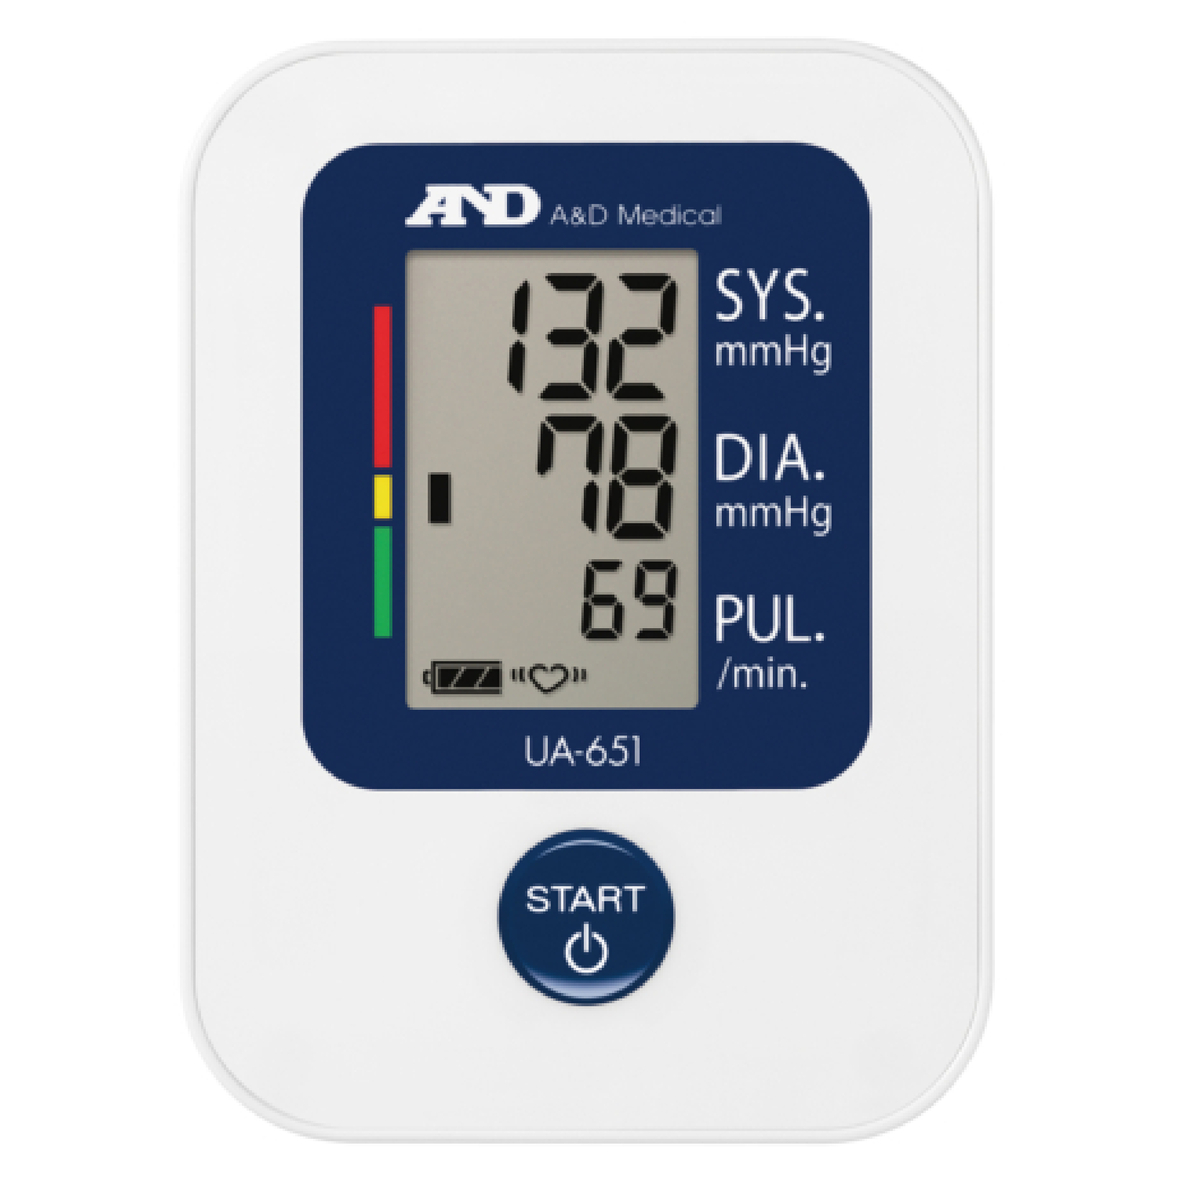 AND Medical Upper Arm Blood Pressure Monitor, White, UA-651